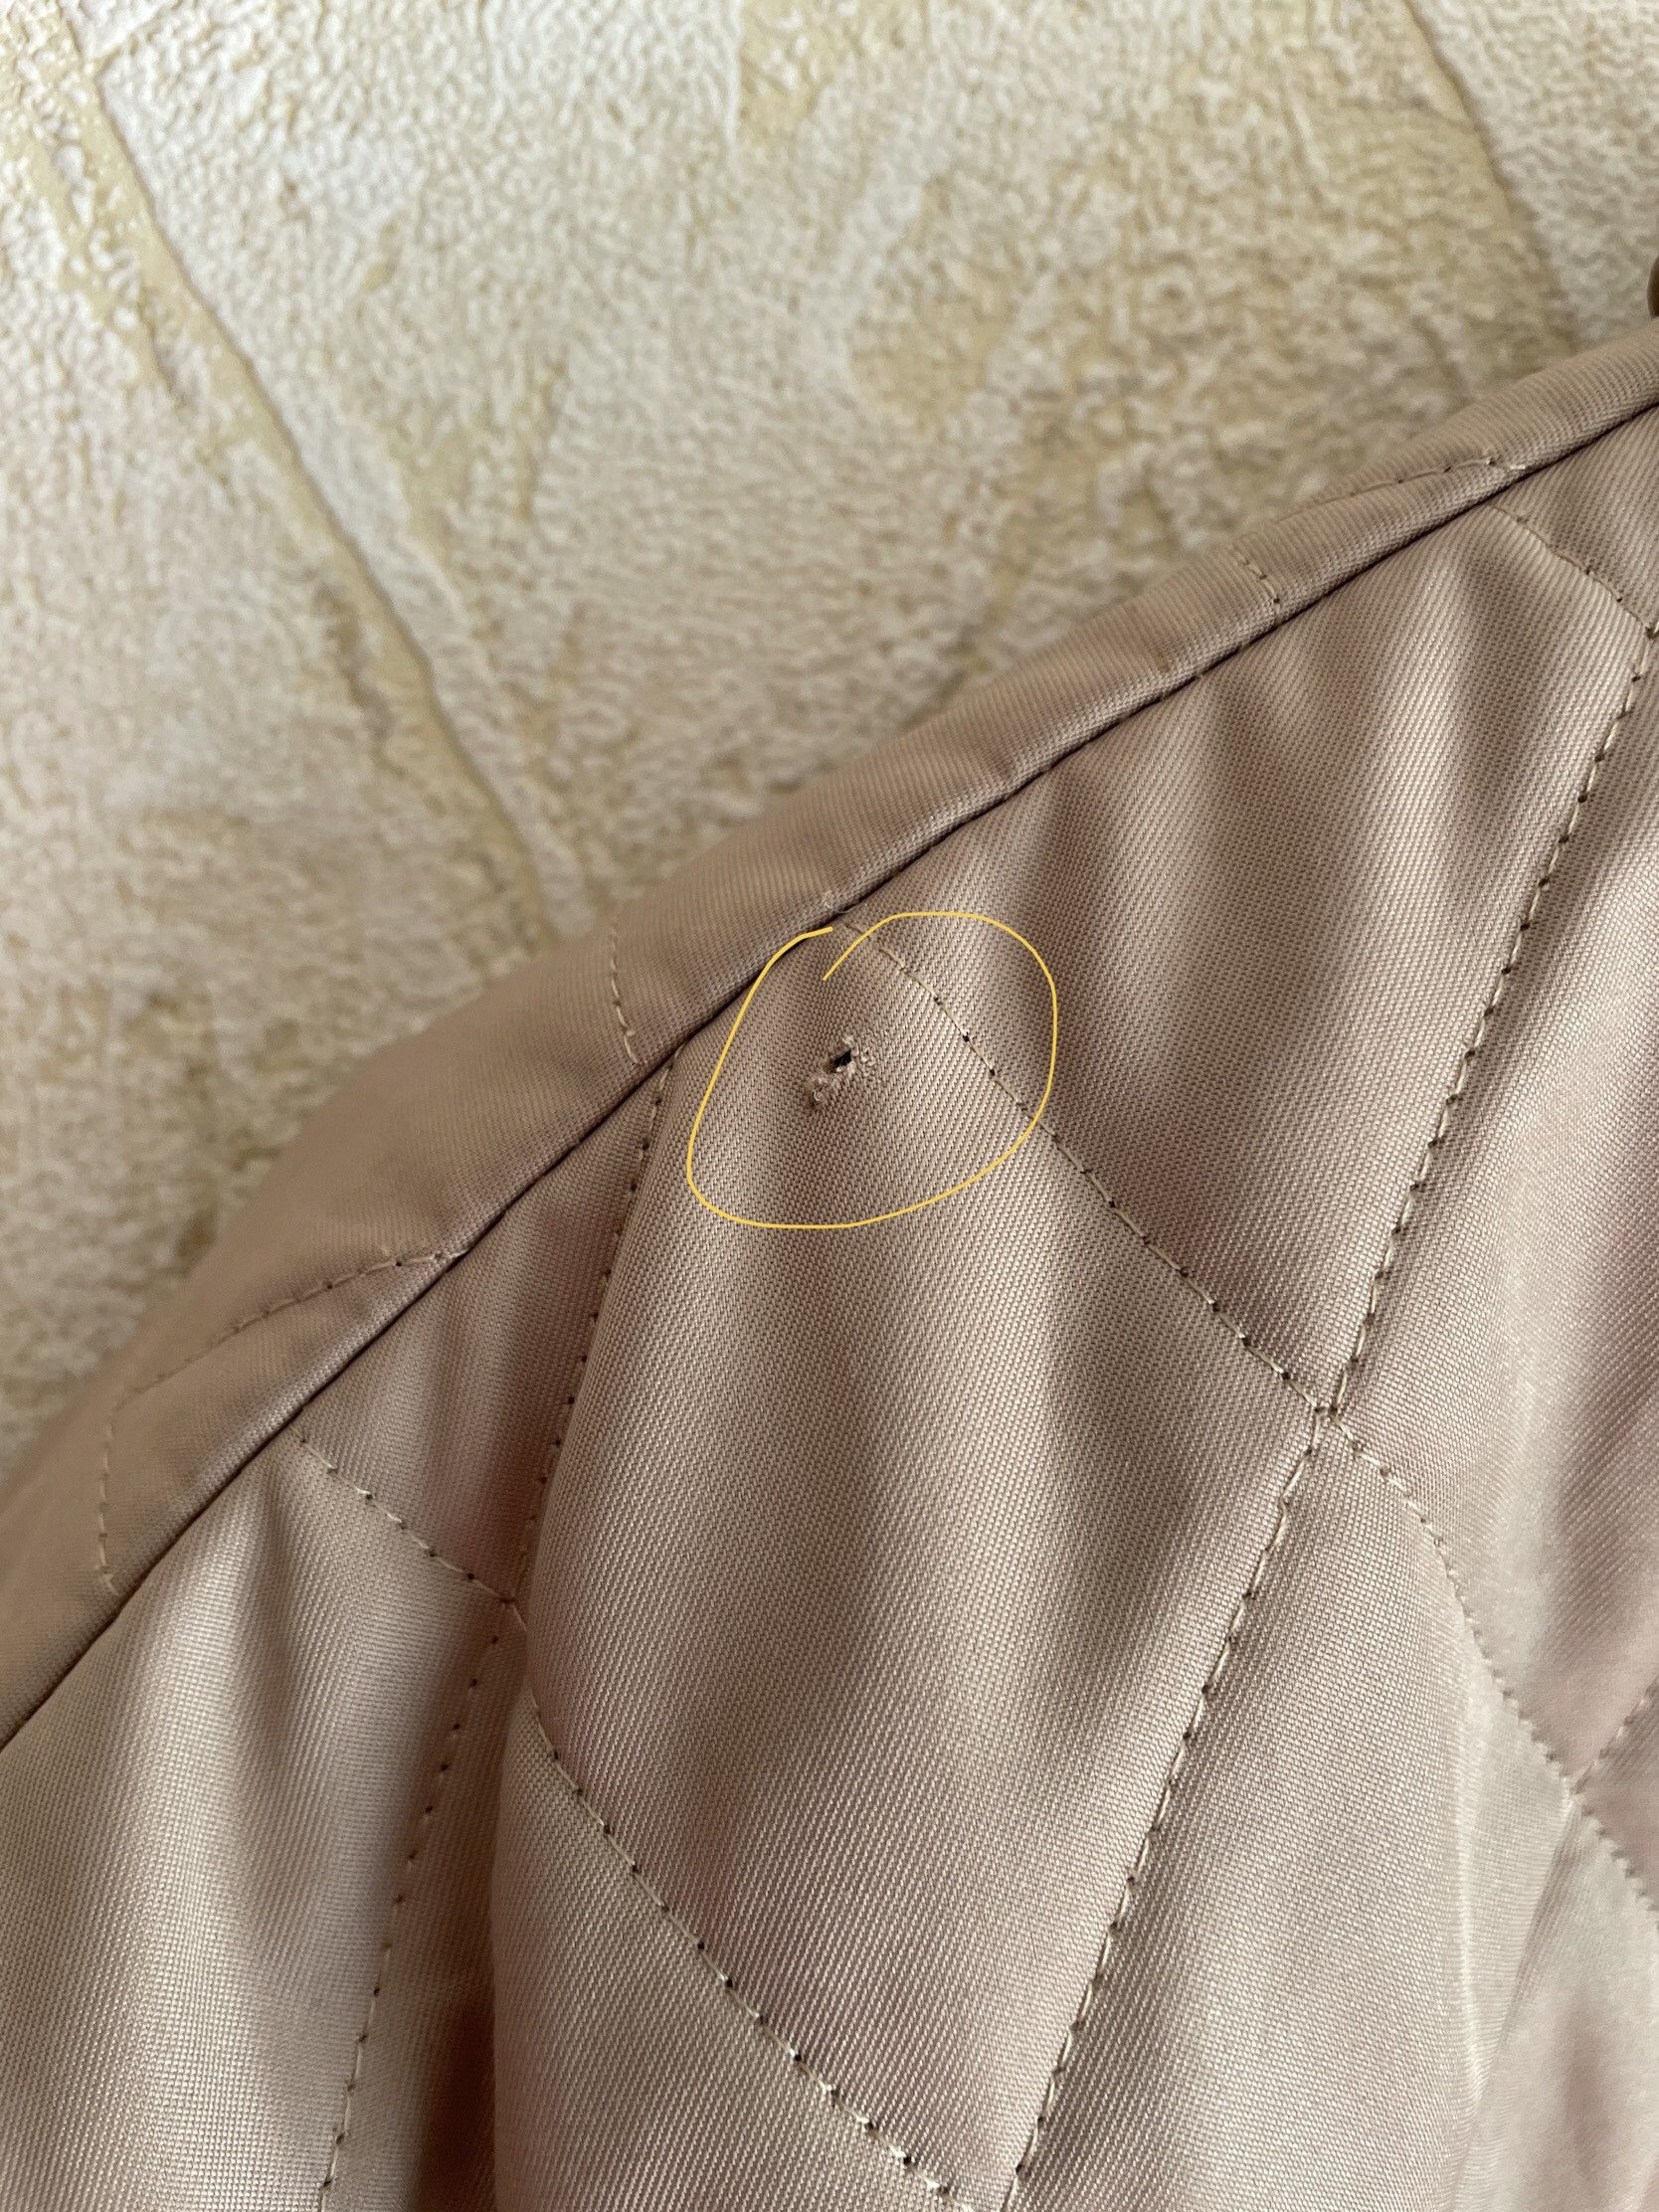 Burberry Burberry Beige Diamond Quilted Jacket Button Nova Check Size M / US 6-8 / IT 42-44 - 14 Thumbnail